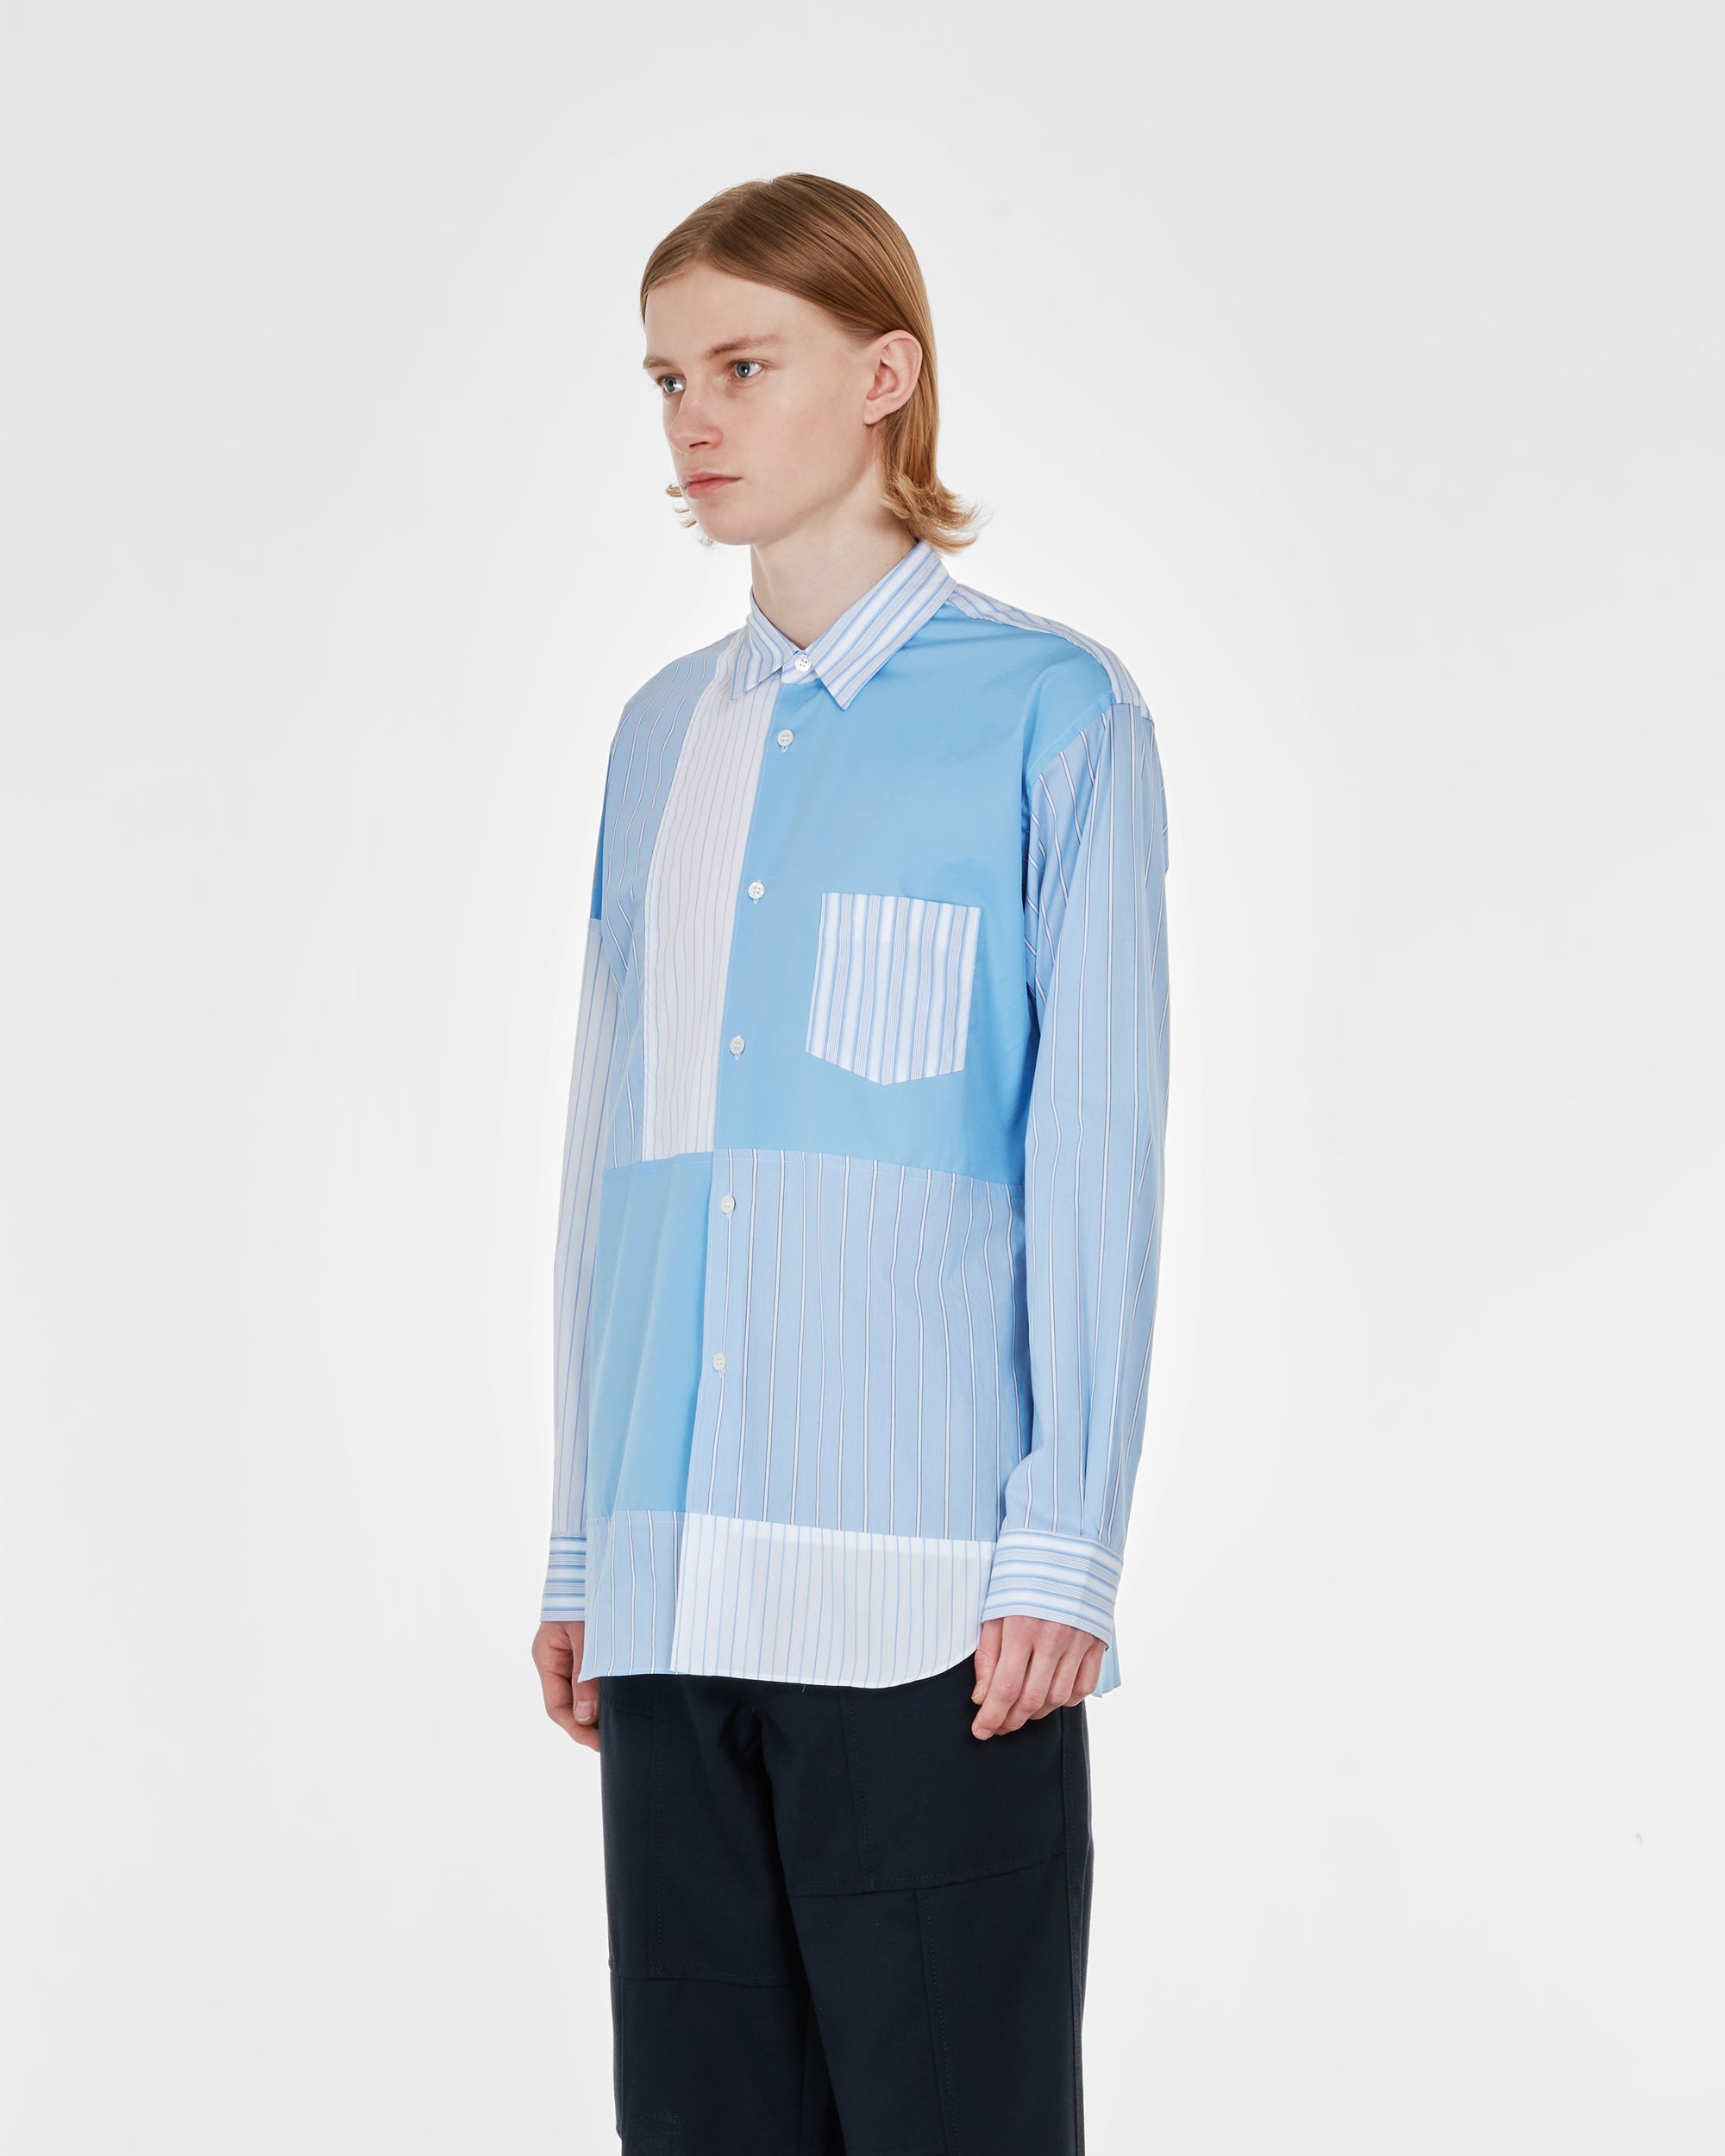 CDG Shirt - Men's Cotton Stripe Poplin Shirt - (Blue) view 4